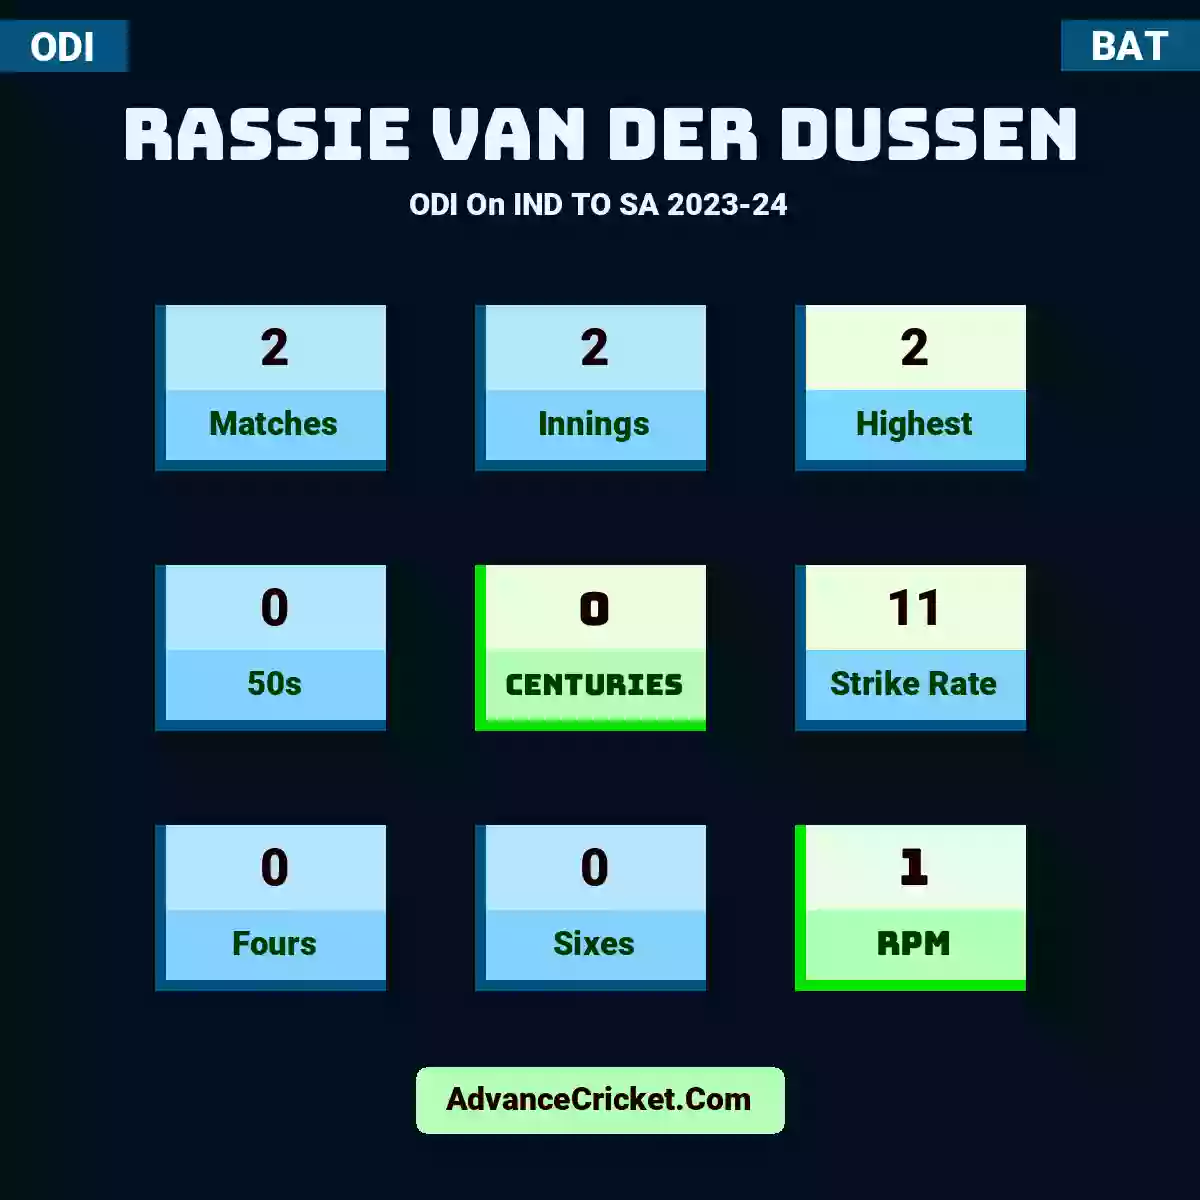 Rassie van der Dussen ODI  On IND TO SA 2023-24, Rassie van der Dussen played 2 matches, scored 2 runs as highest, 0 half-centuries, and 0 centuries, with a strike rate of 11. R.Dussen hit 0 fours and 0 sixes, with an RPM of 1.